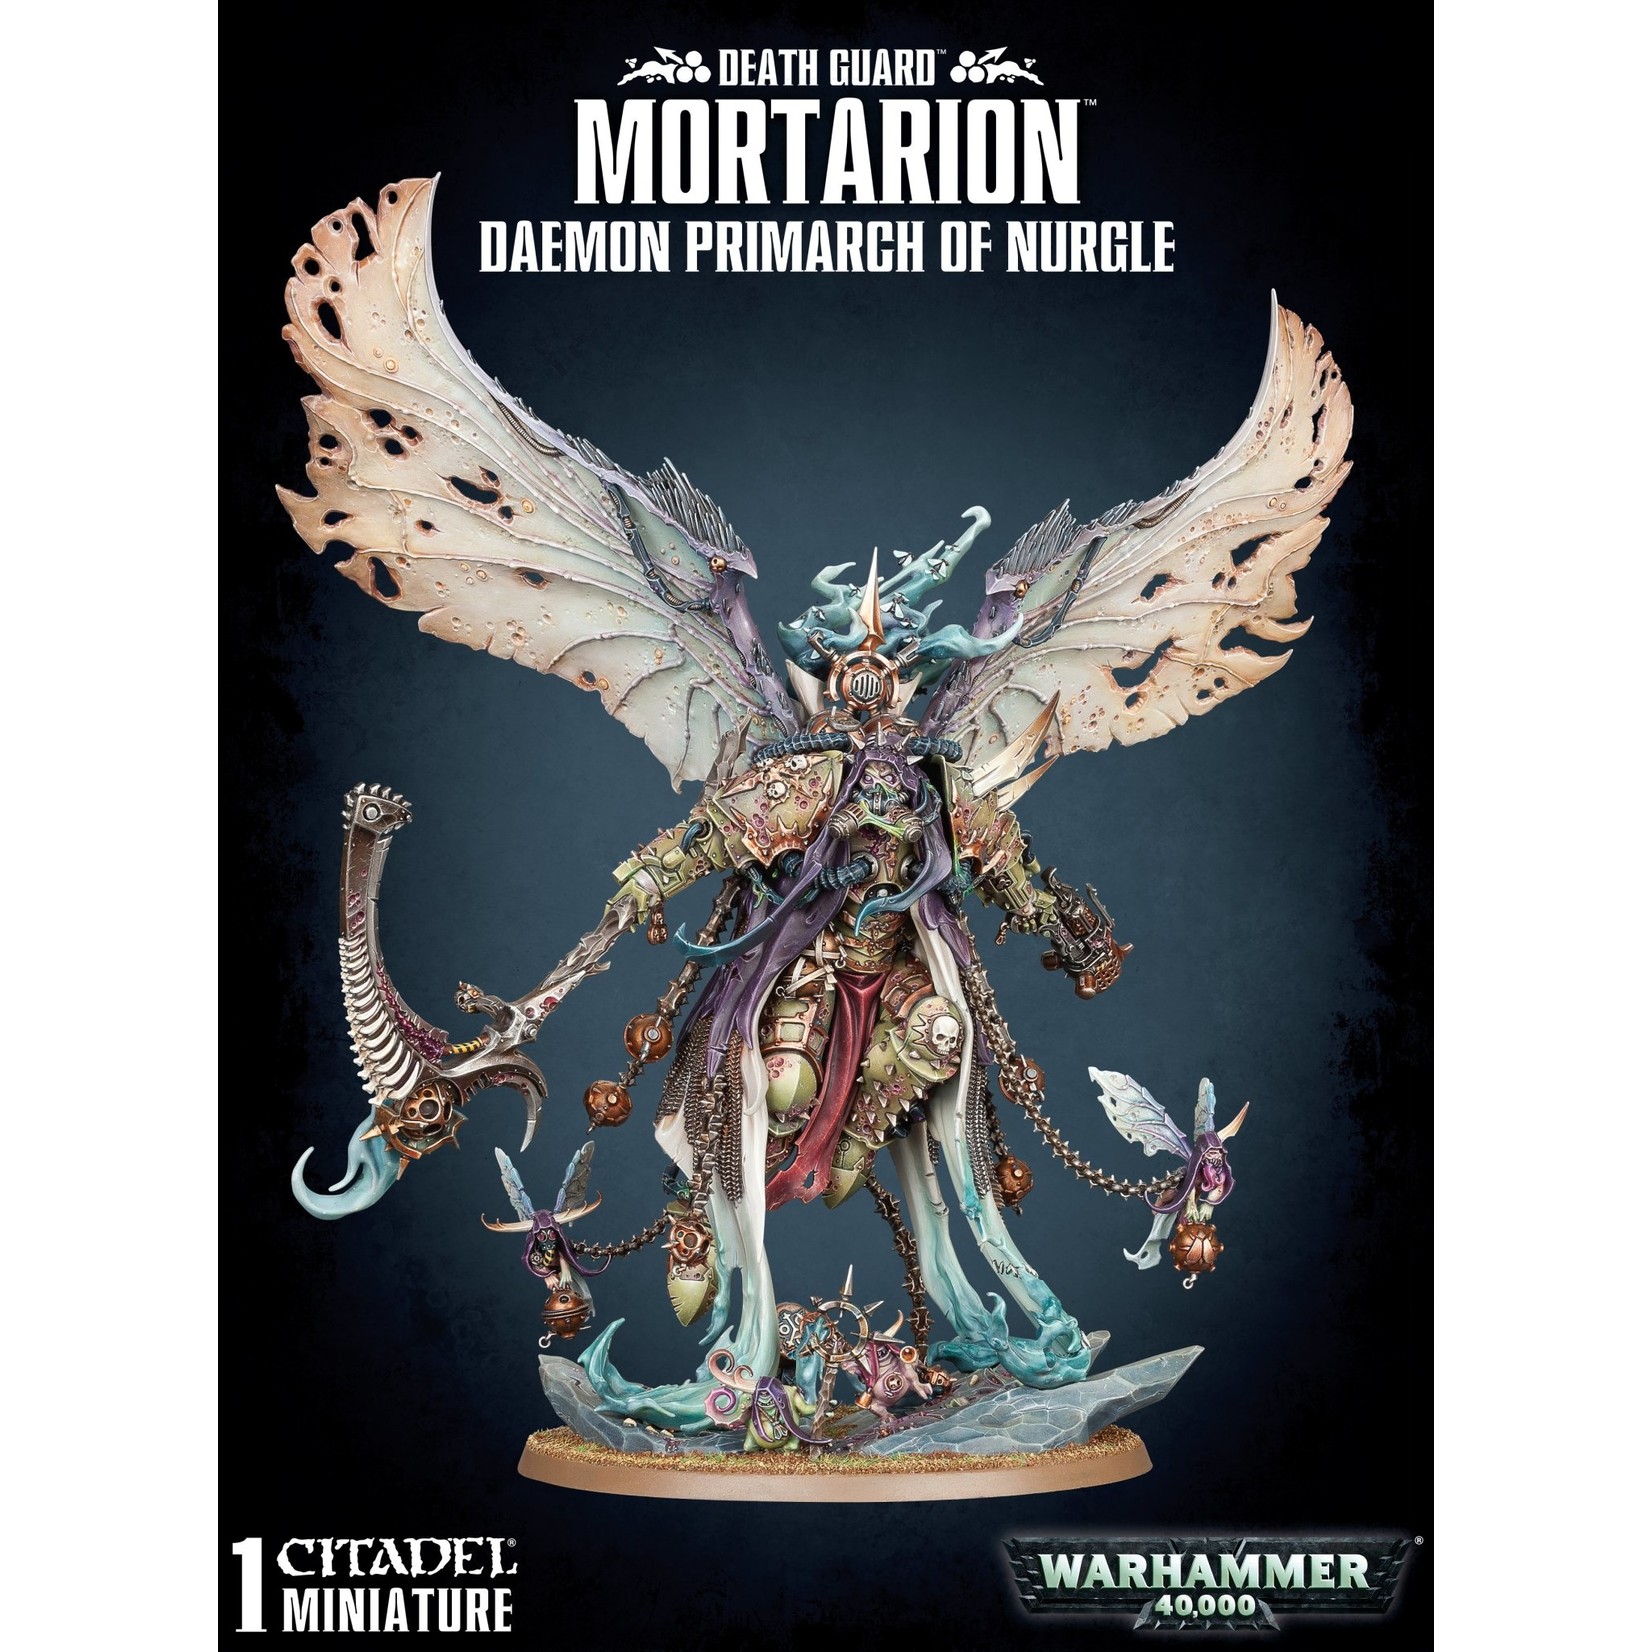 Warhammer 40k Warhammer 40k: Death Guard: Mortarion